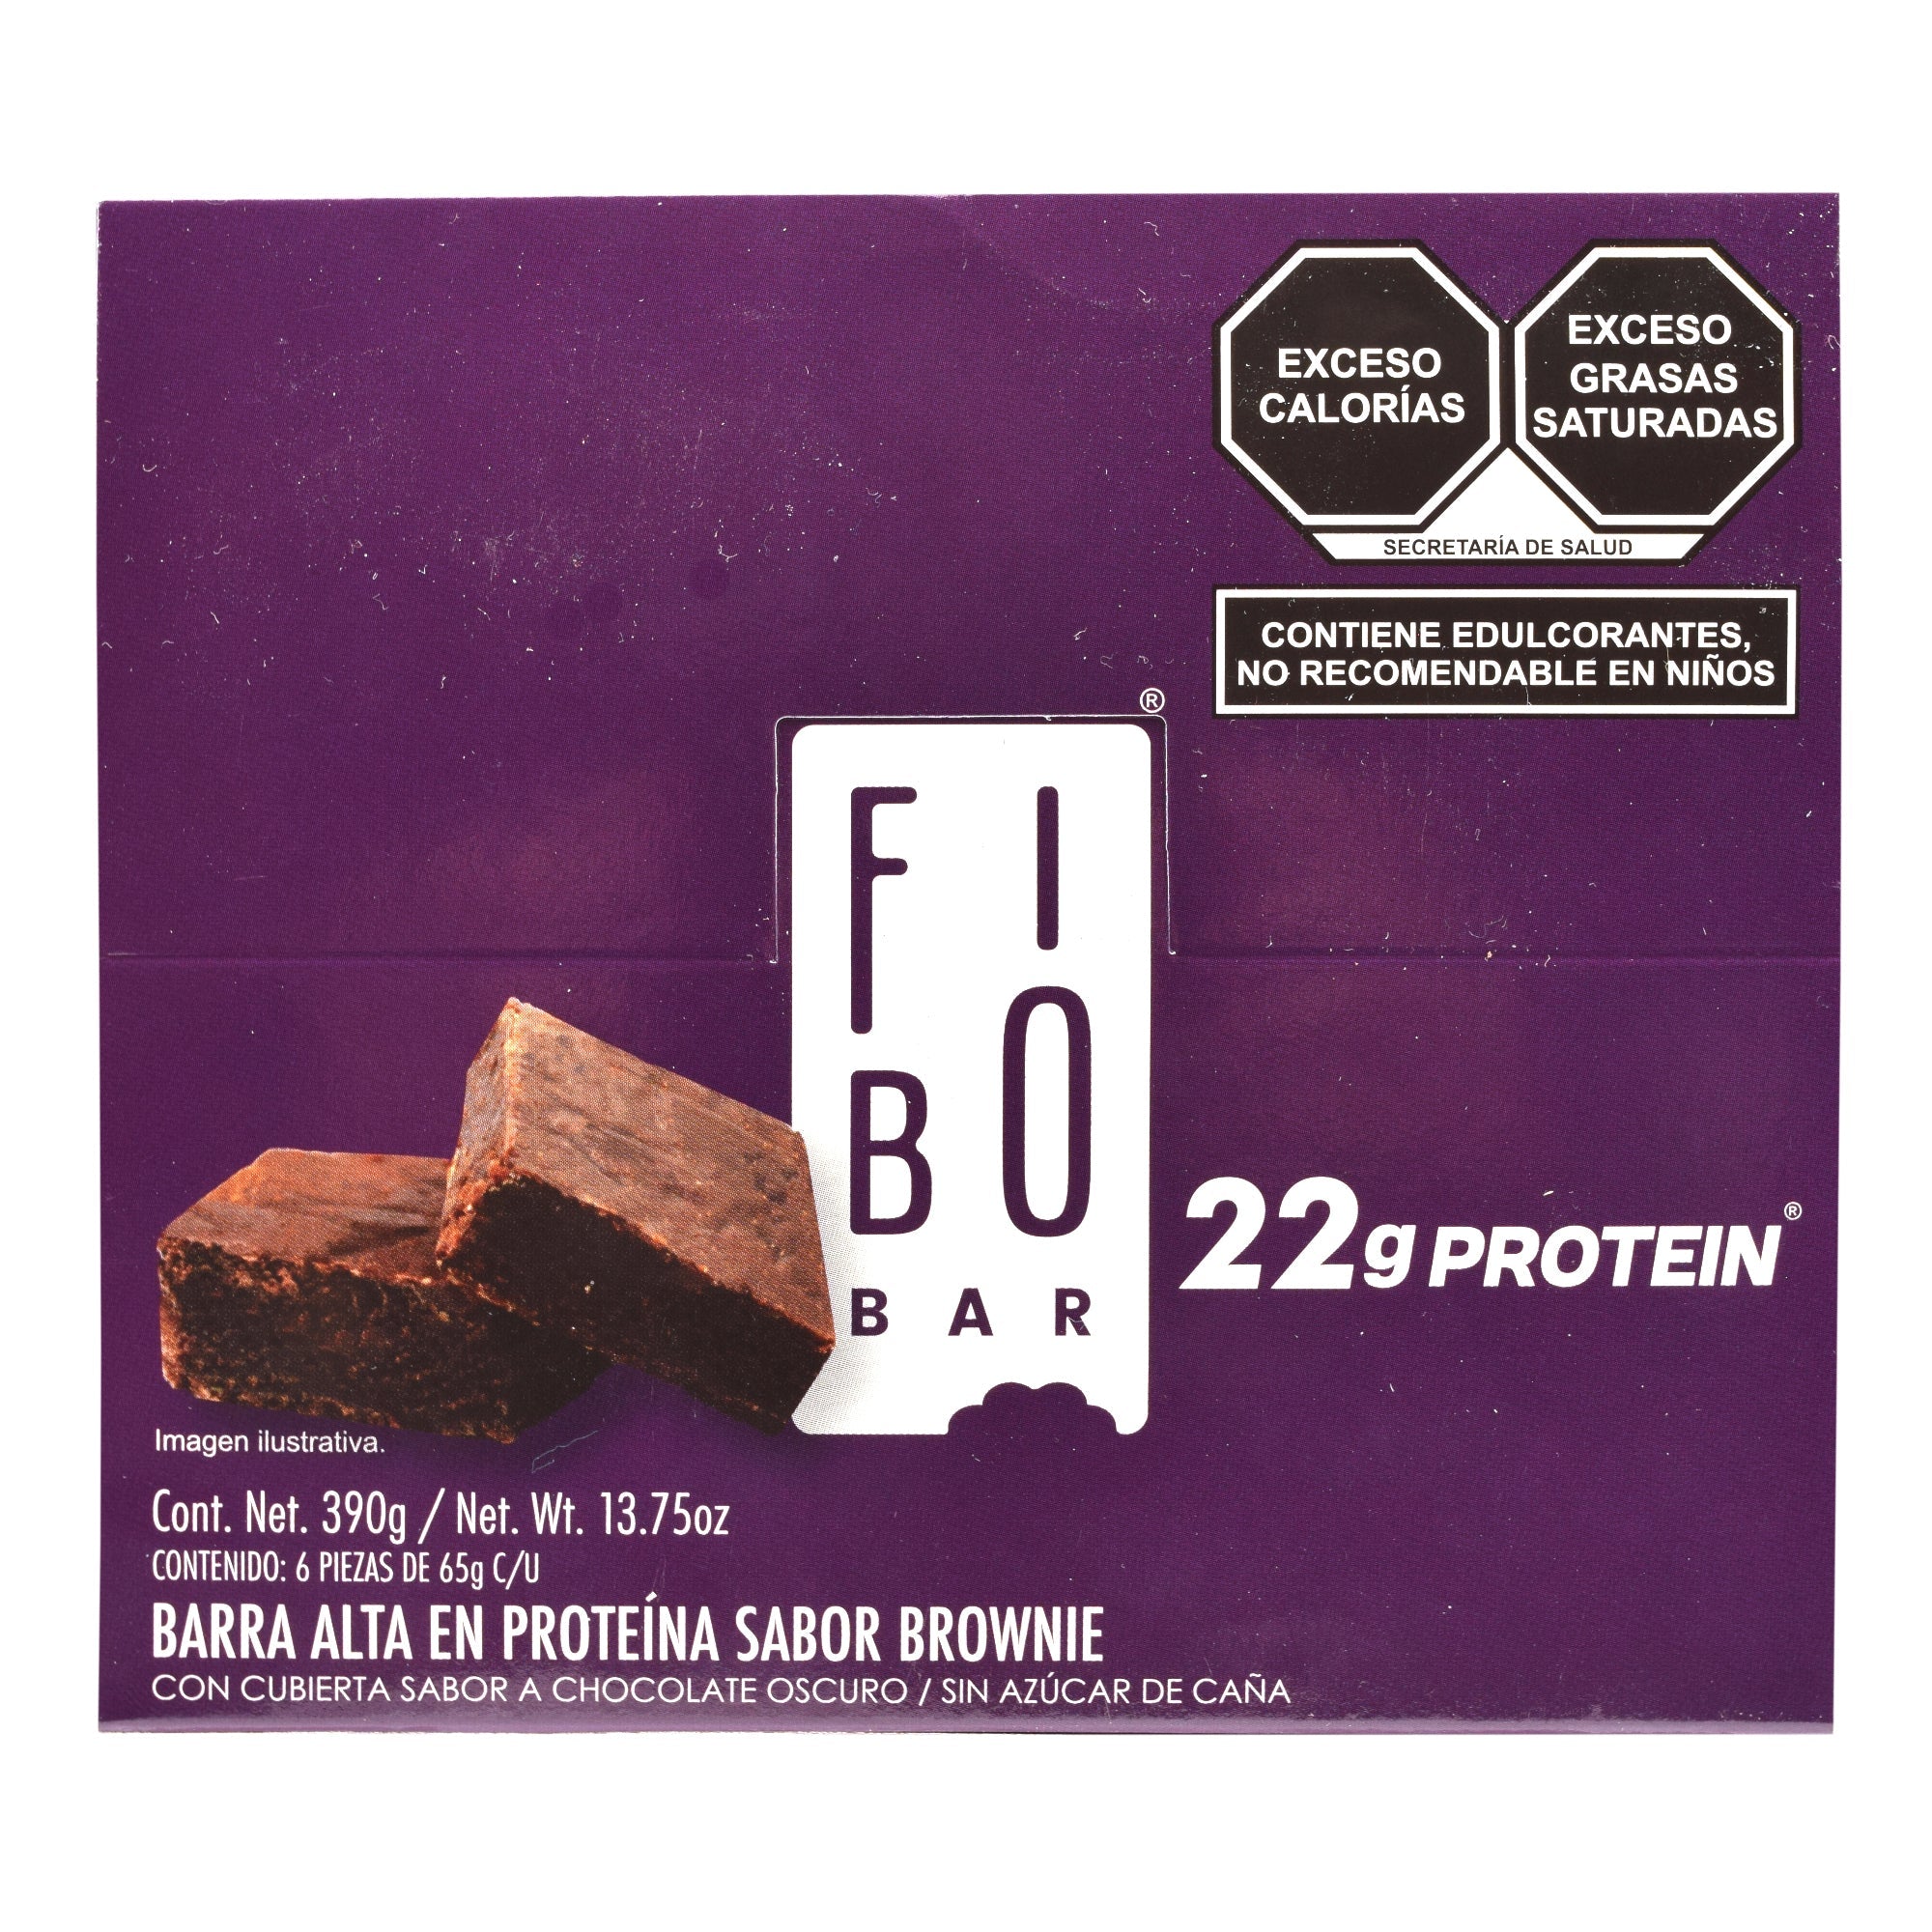 Barra de proteina cubierta de chocolate oscuro brownie 65 g (PAQUETE 6)